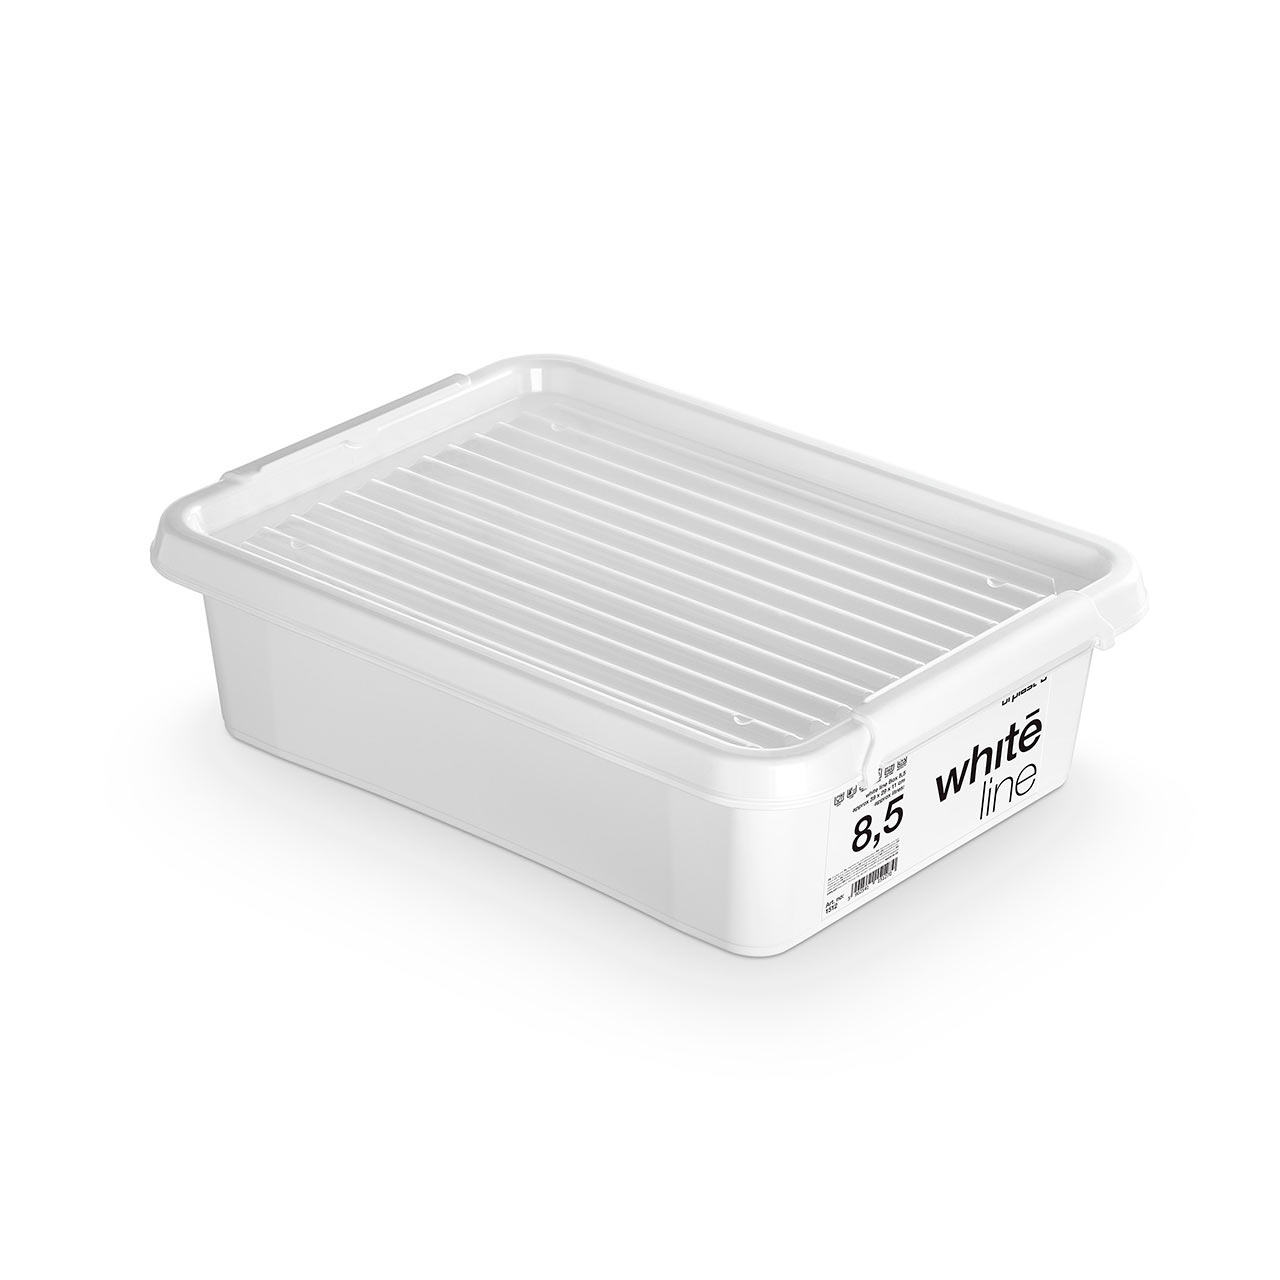 Storage container white.line 1512 White